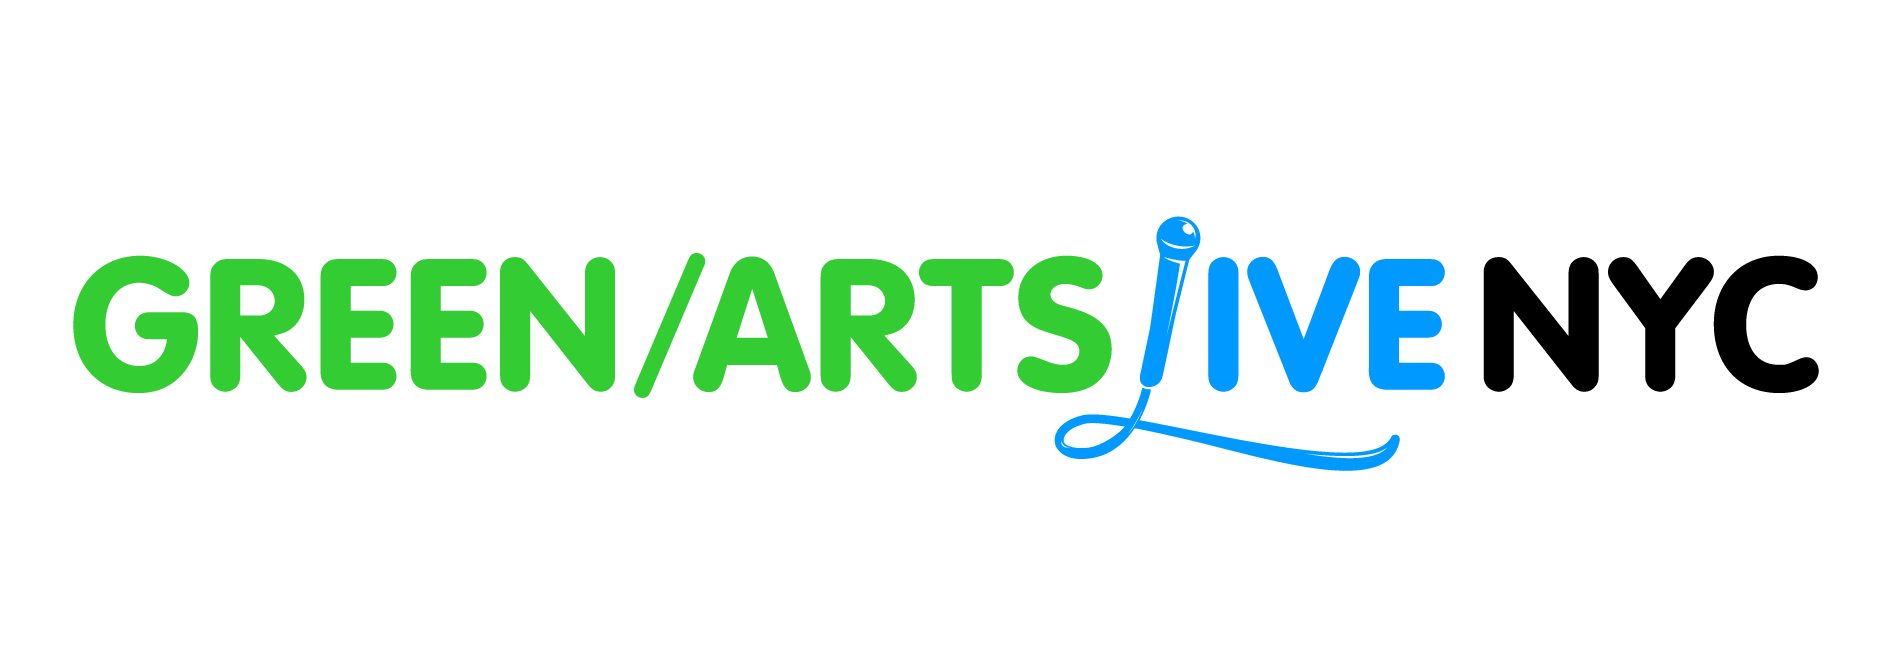 Green Arts LIVE NYC logo